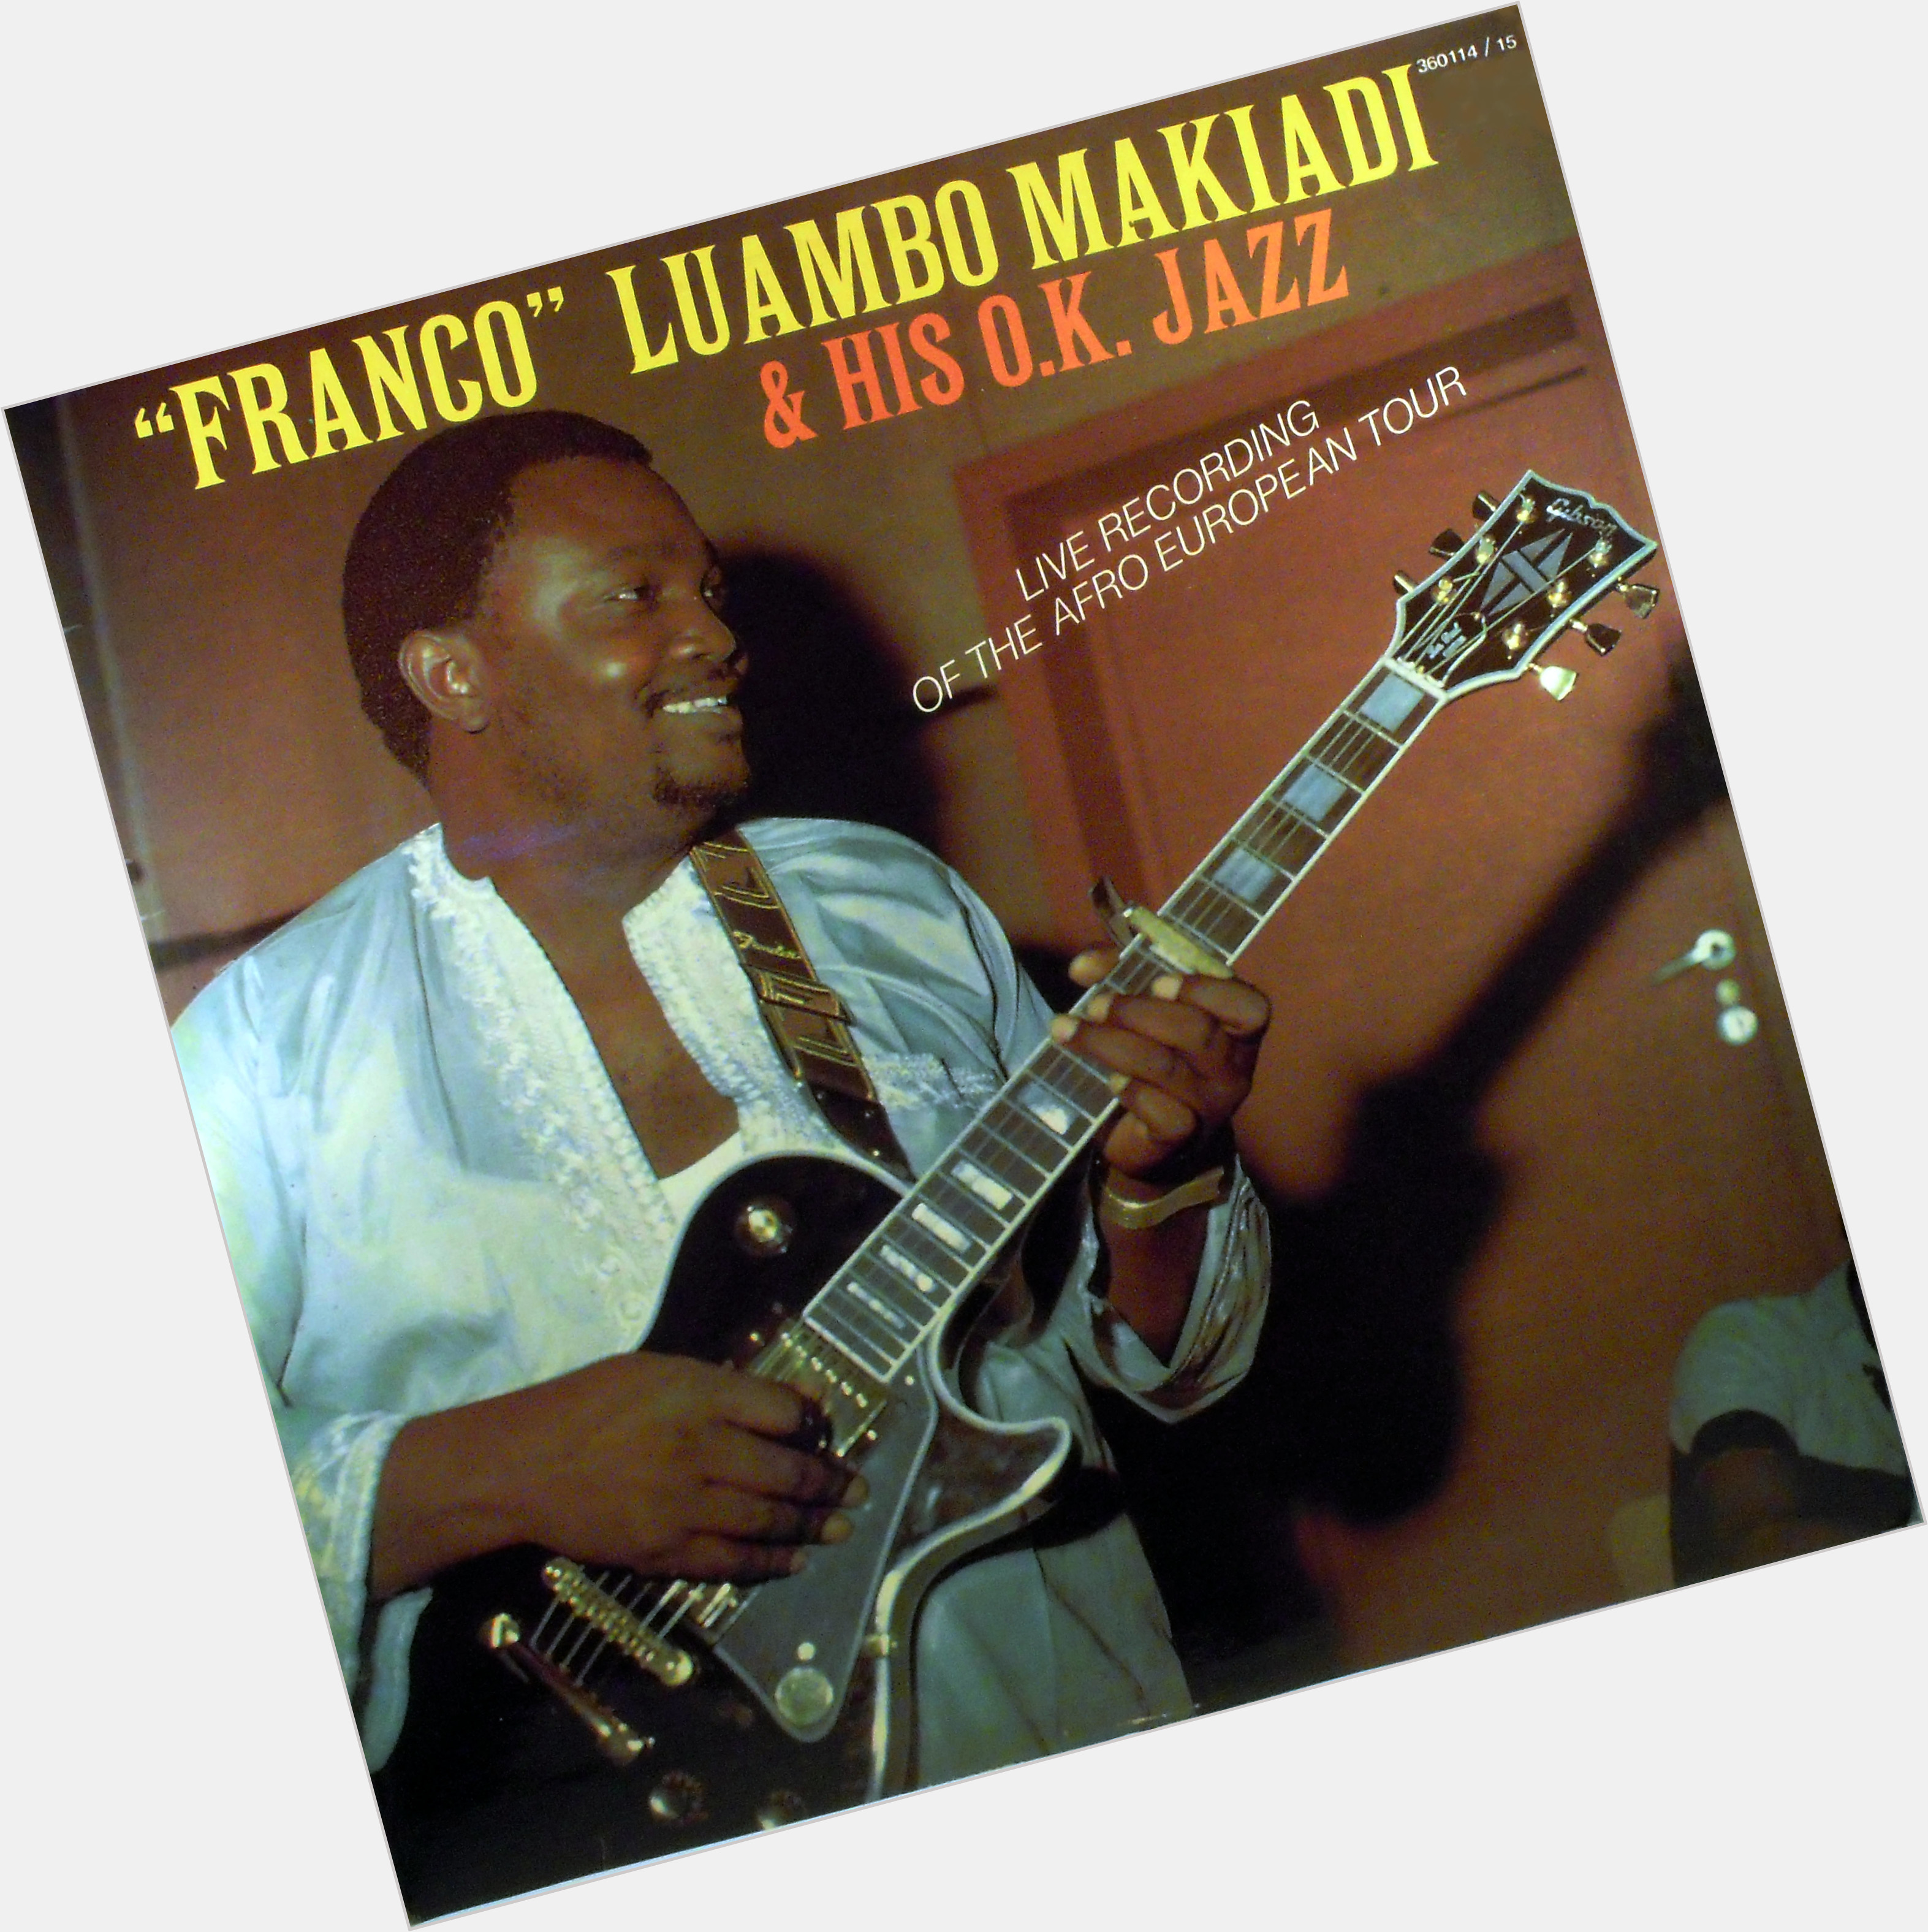 Francois Luambo Makiadi dating 1